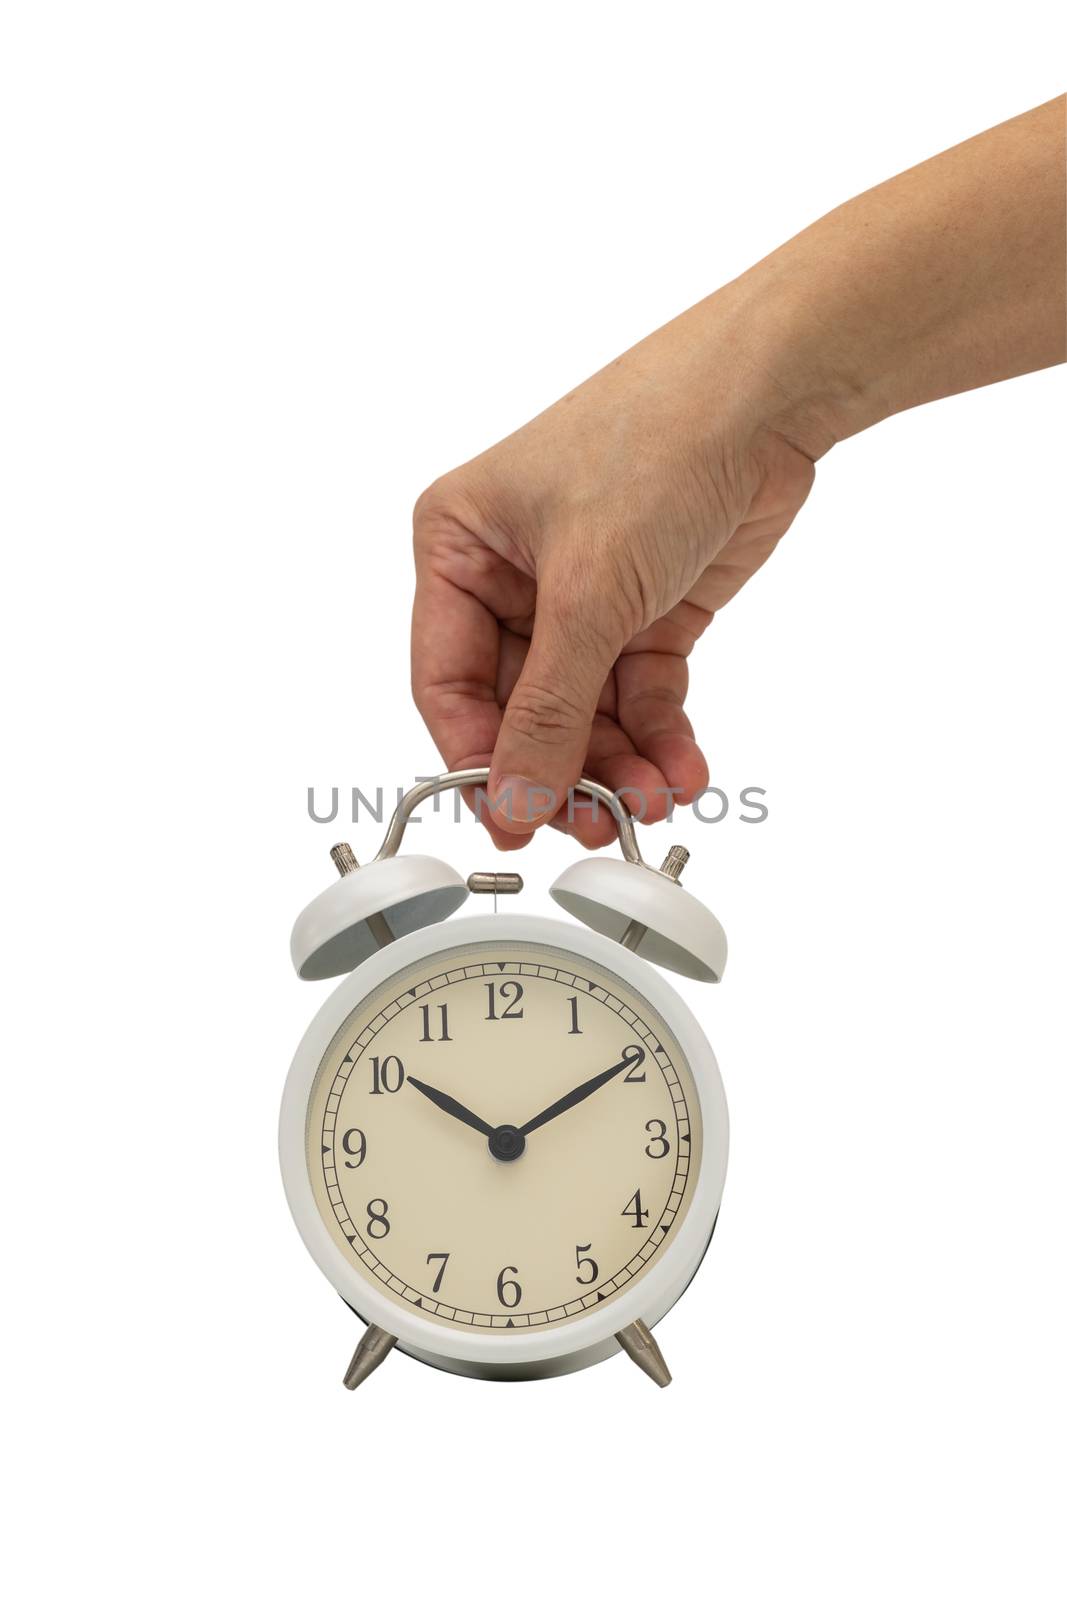 Hand holding white vintage alarm clock isolated on white  background.